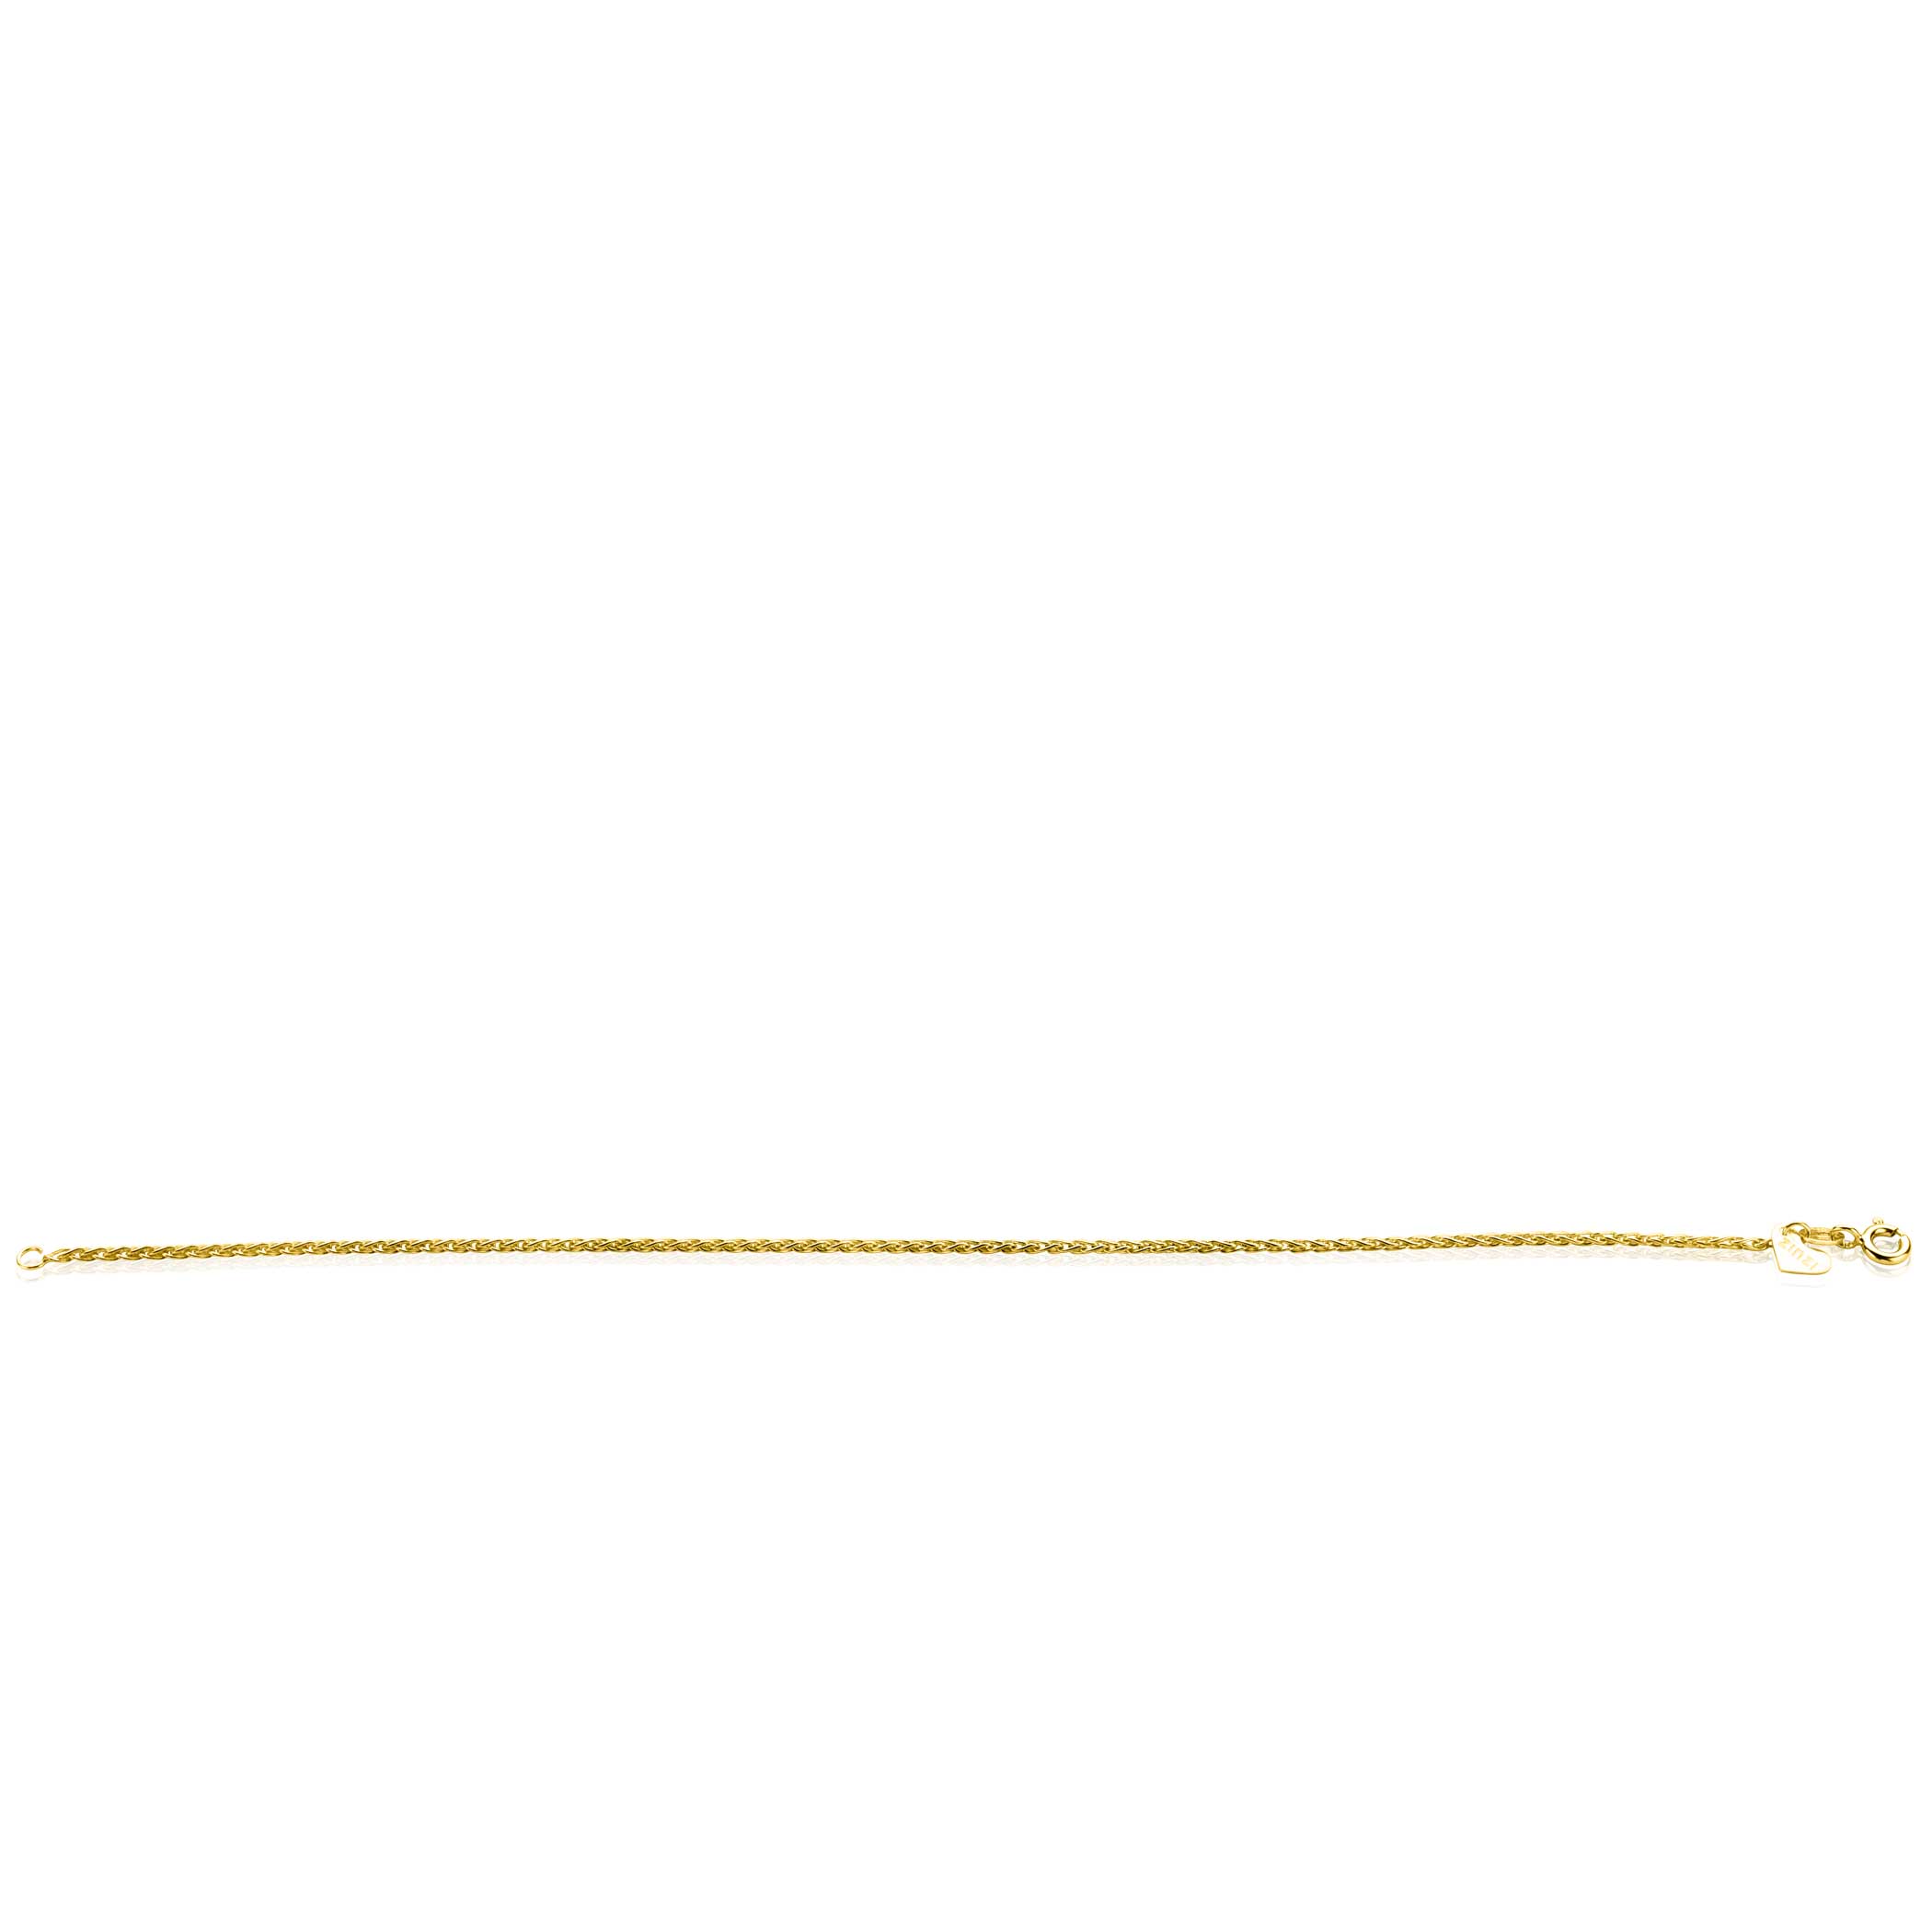 ZINZI Gold 14 krt gouden palmier armband 1,5mm breed, lengte 18,5cm ZGA307